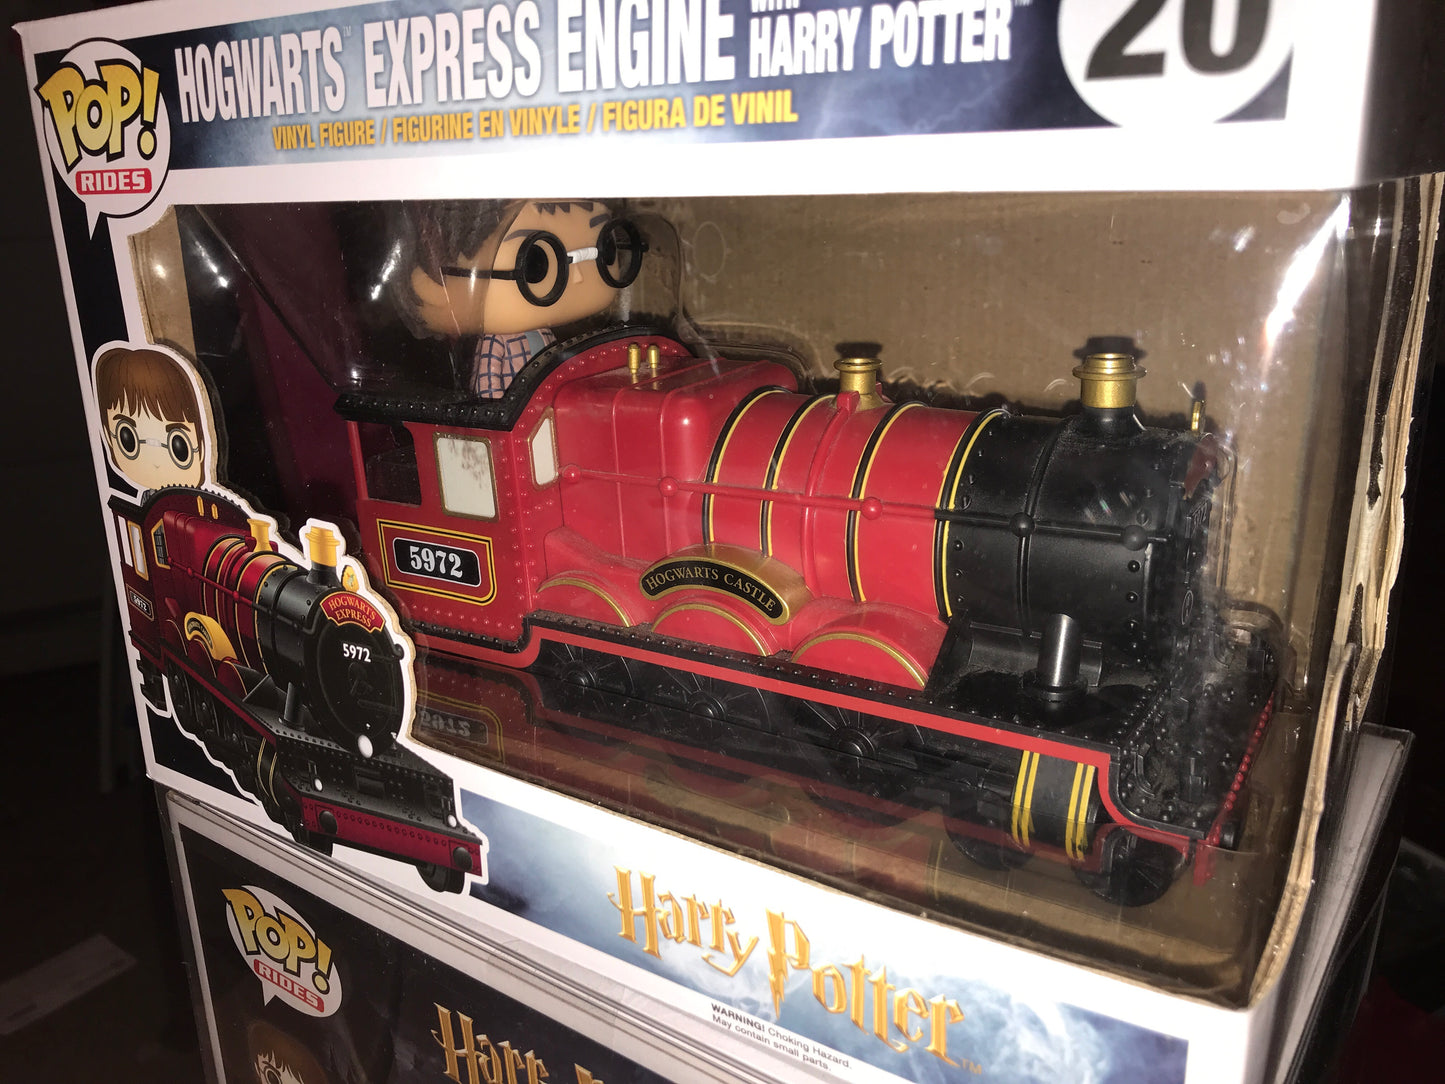 Harry Potter express engine as is Funko Pop! Vinyl figure